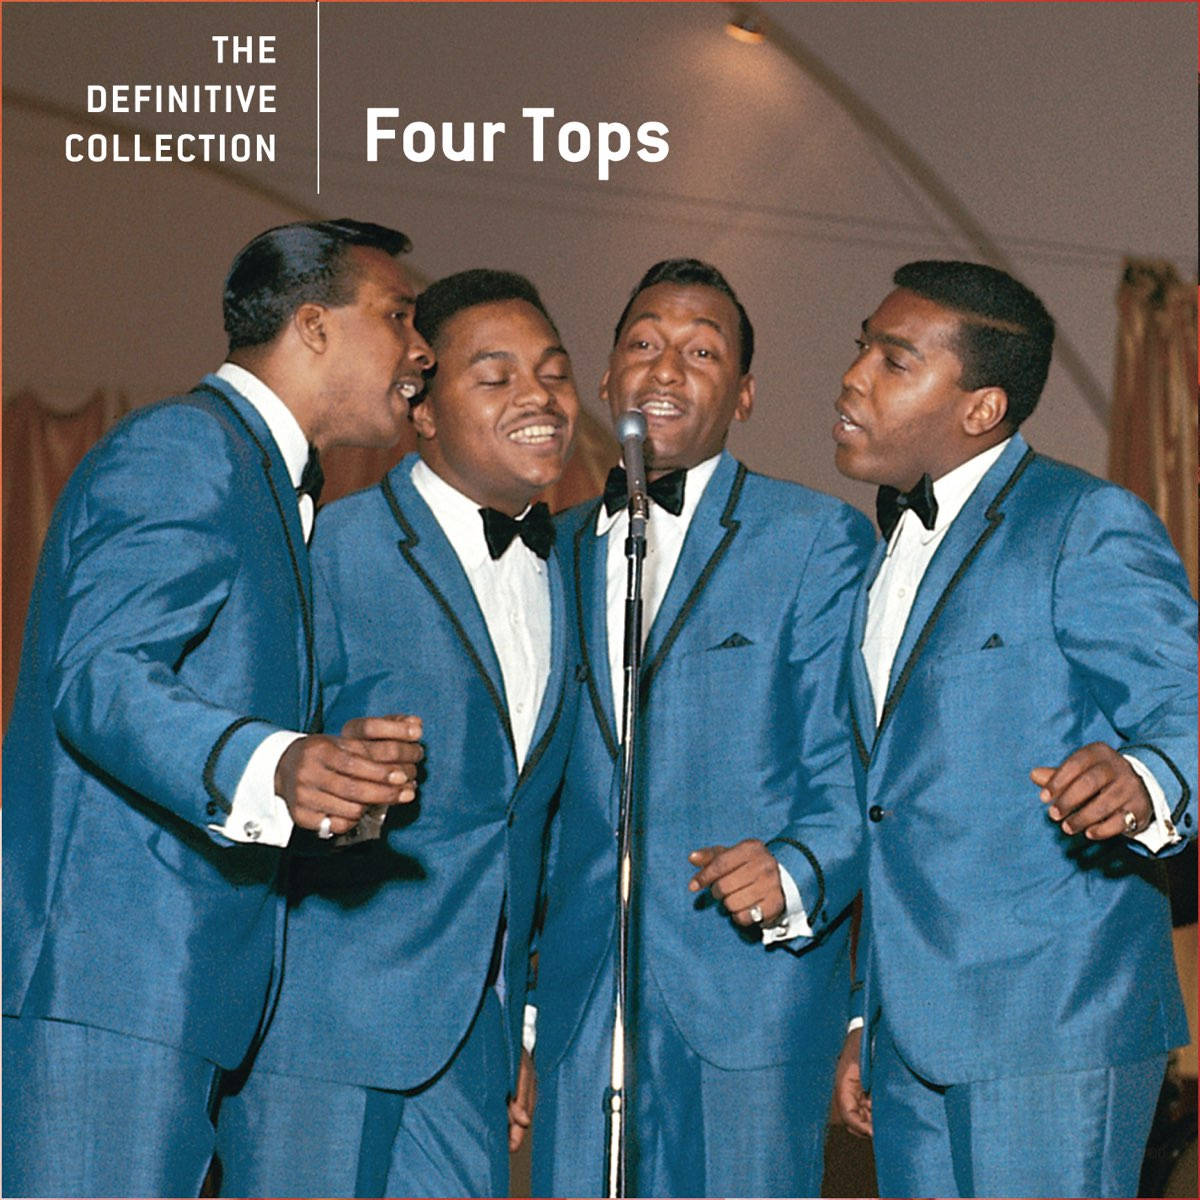 American Vocal Quartet Four Tops The Definitive Collection Album Cover Wallpaper